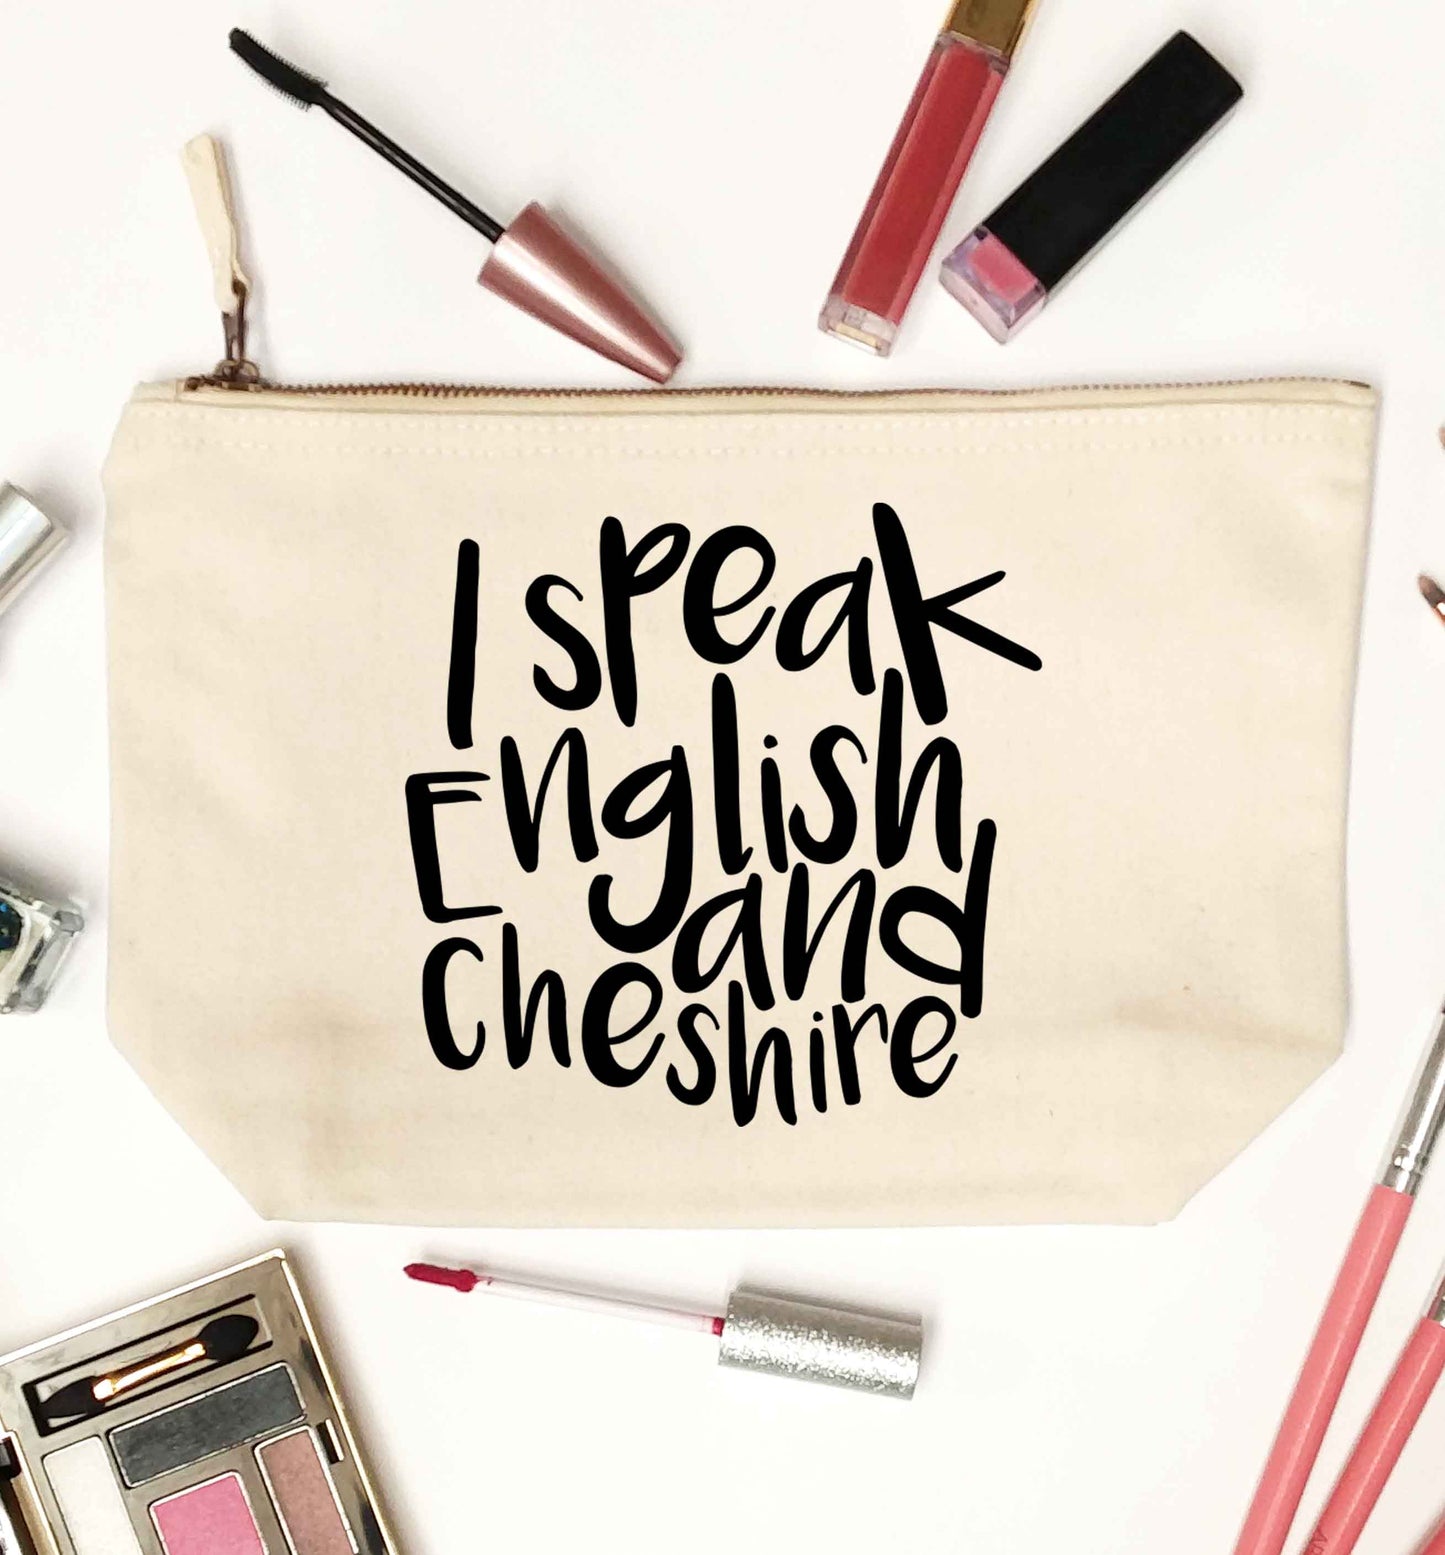 I speak English and Cheshire natural makeup bag